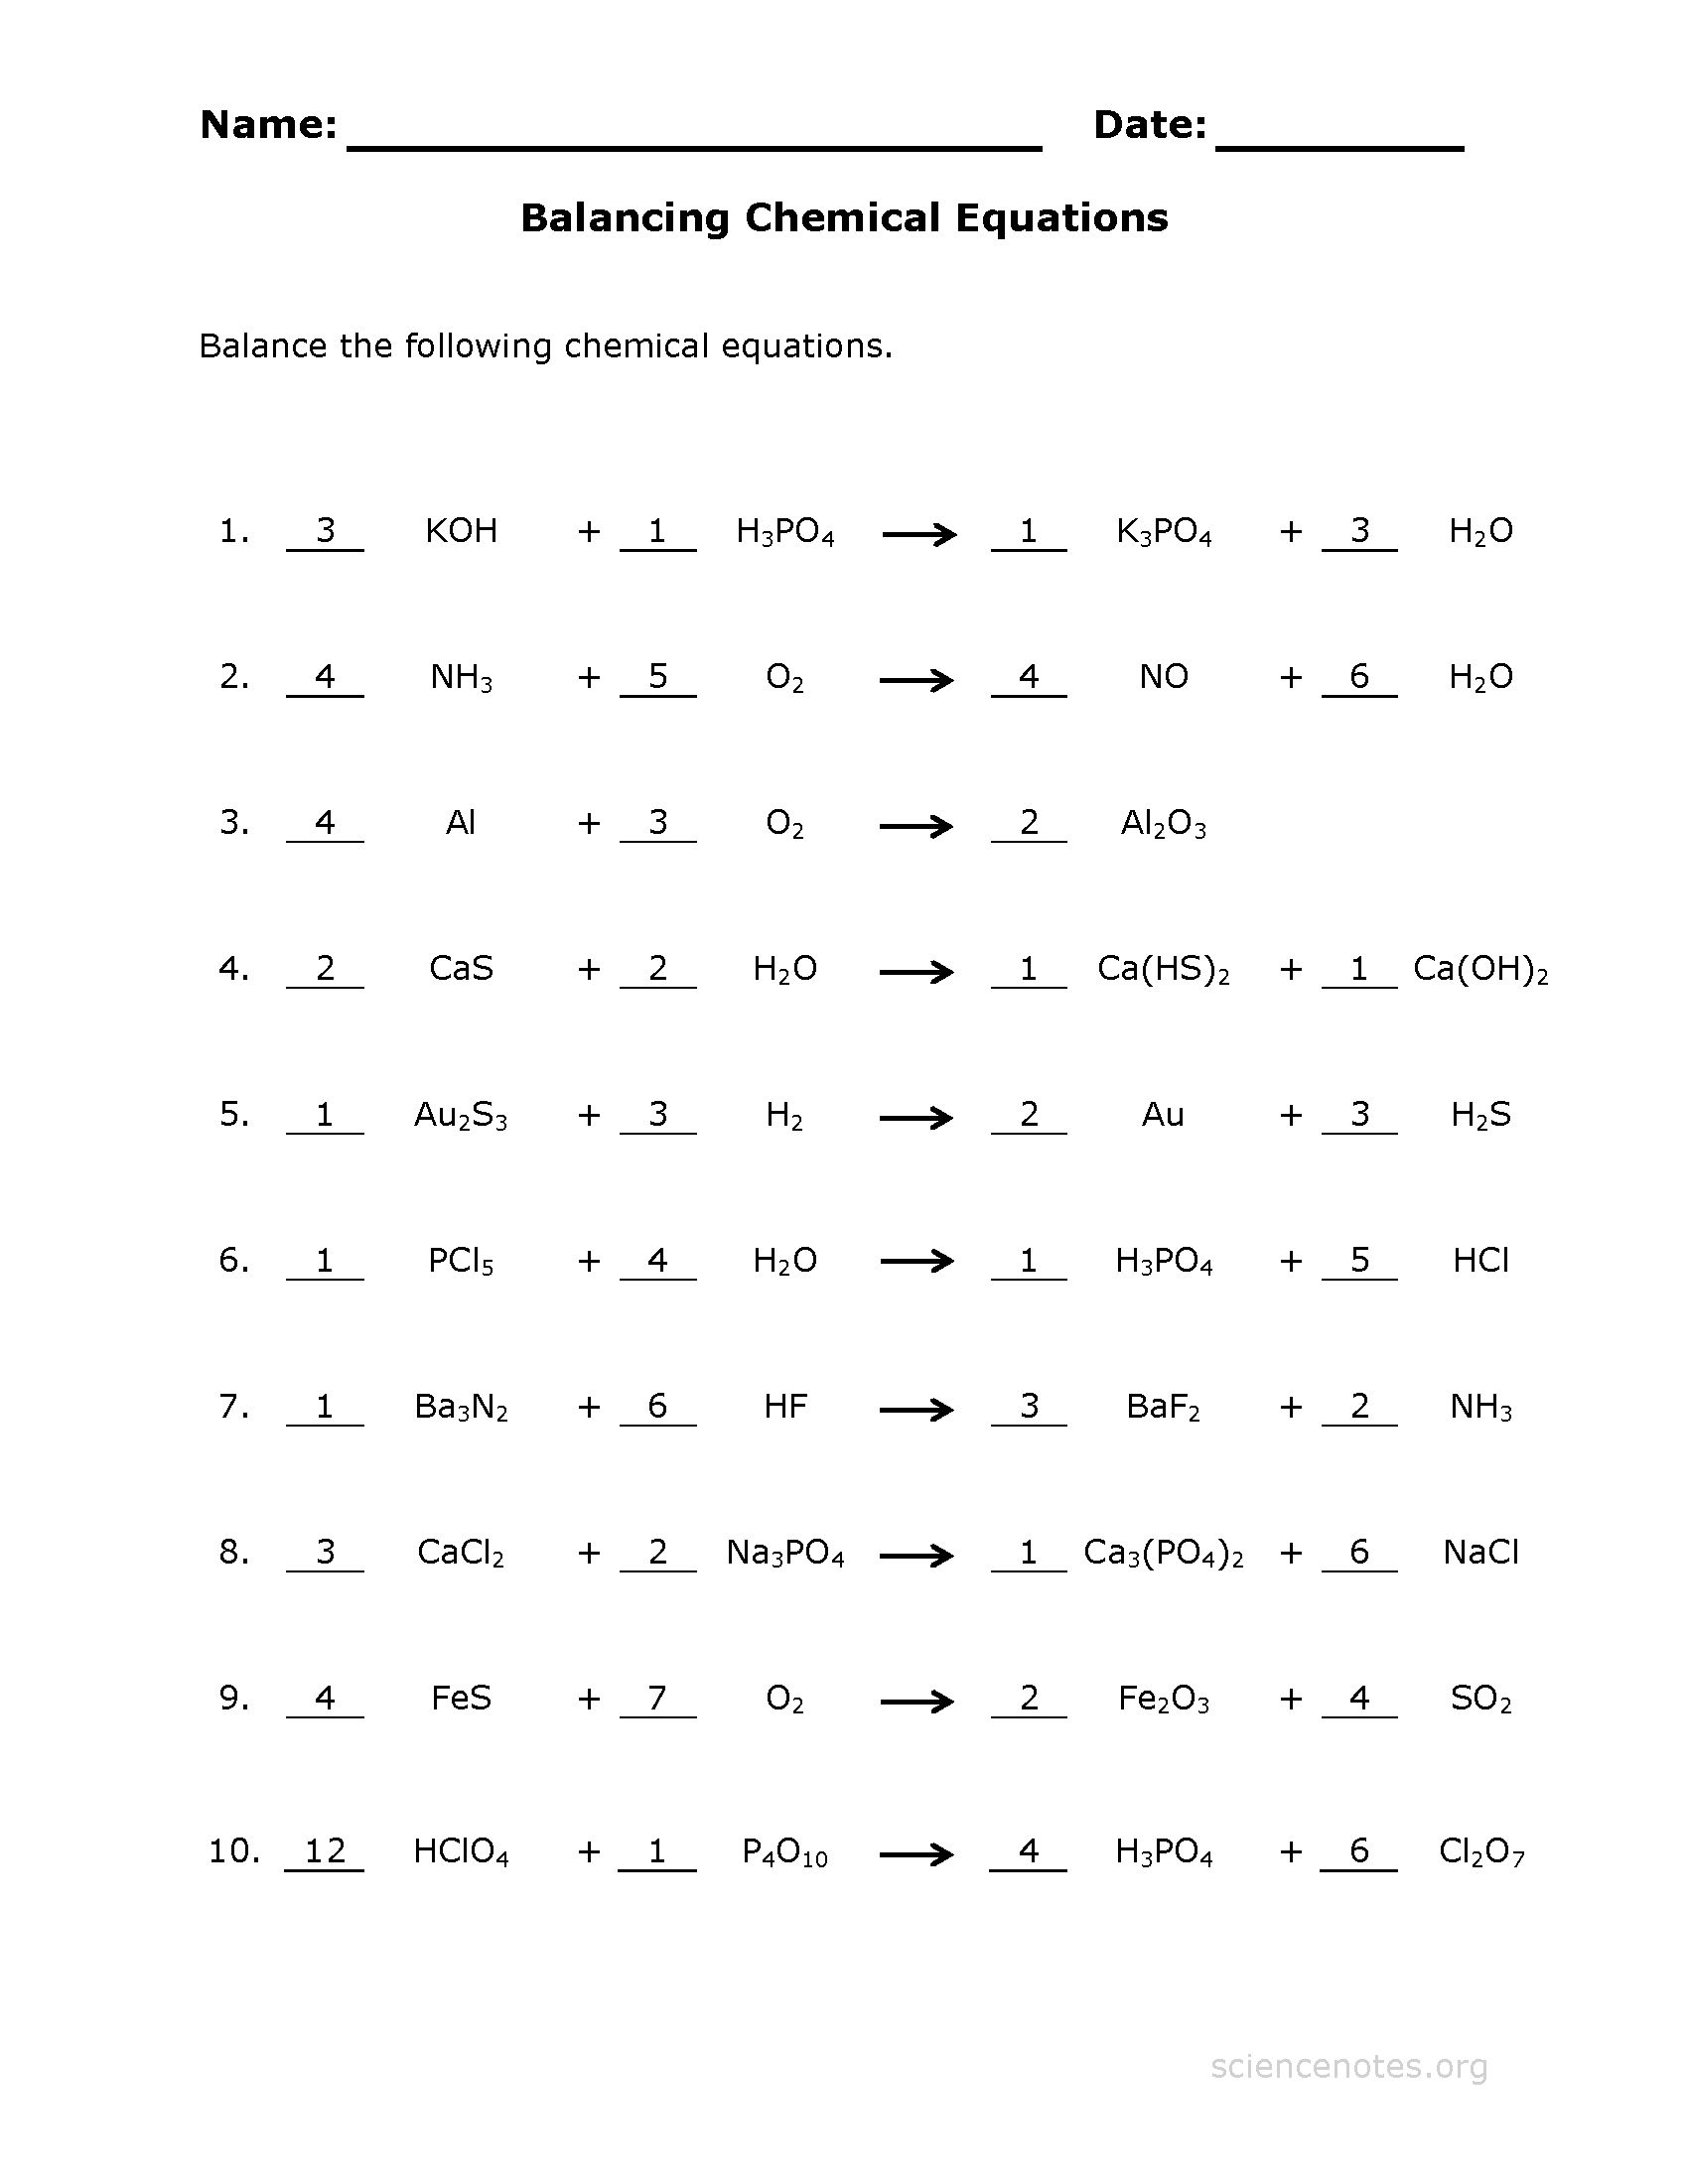 Balancing Equation Practice Sheet [answer sheet]